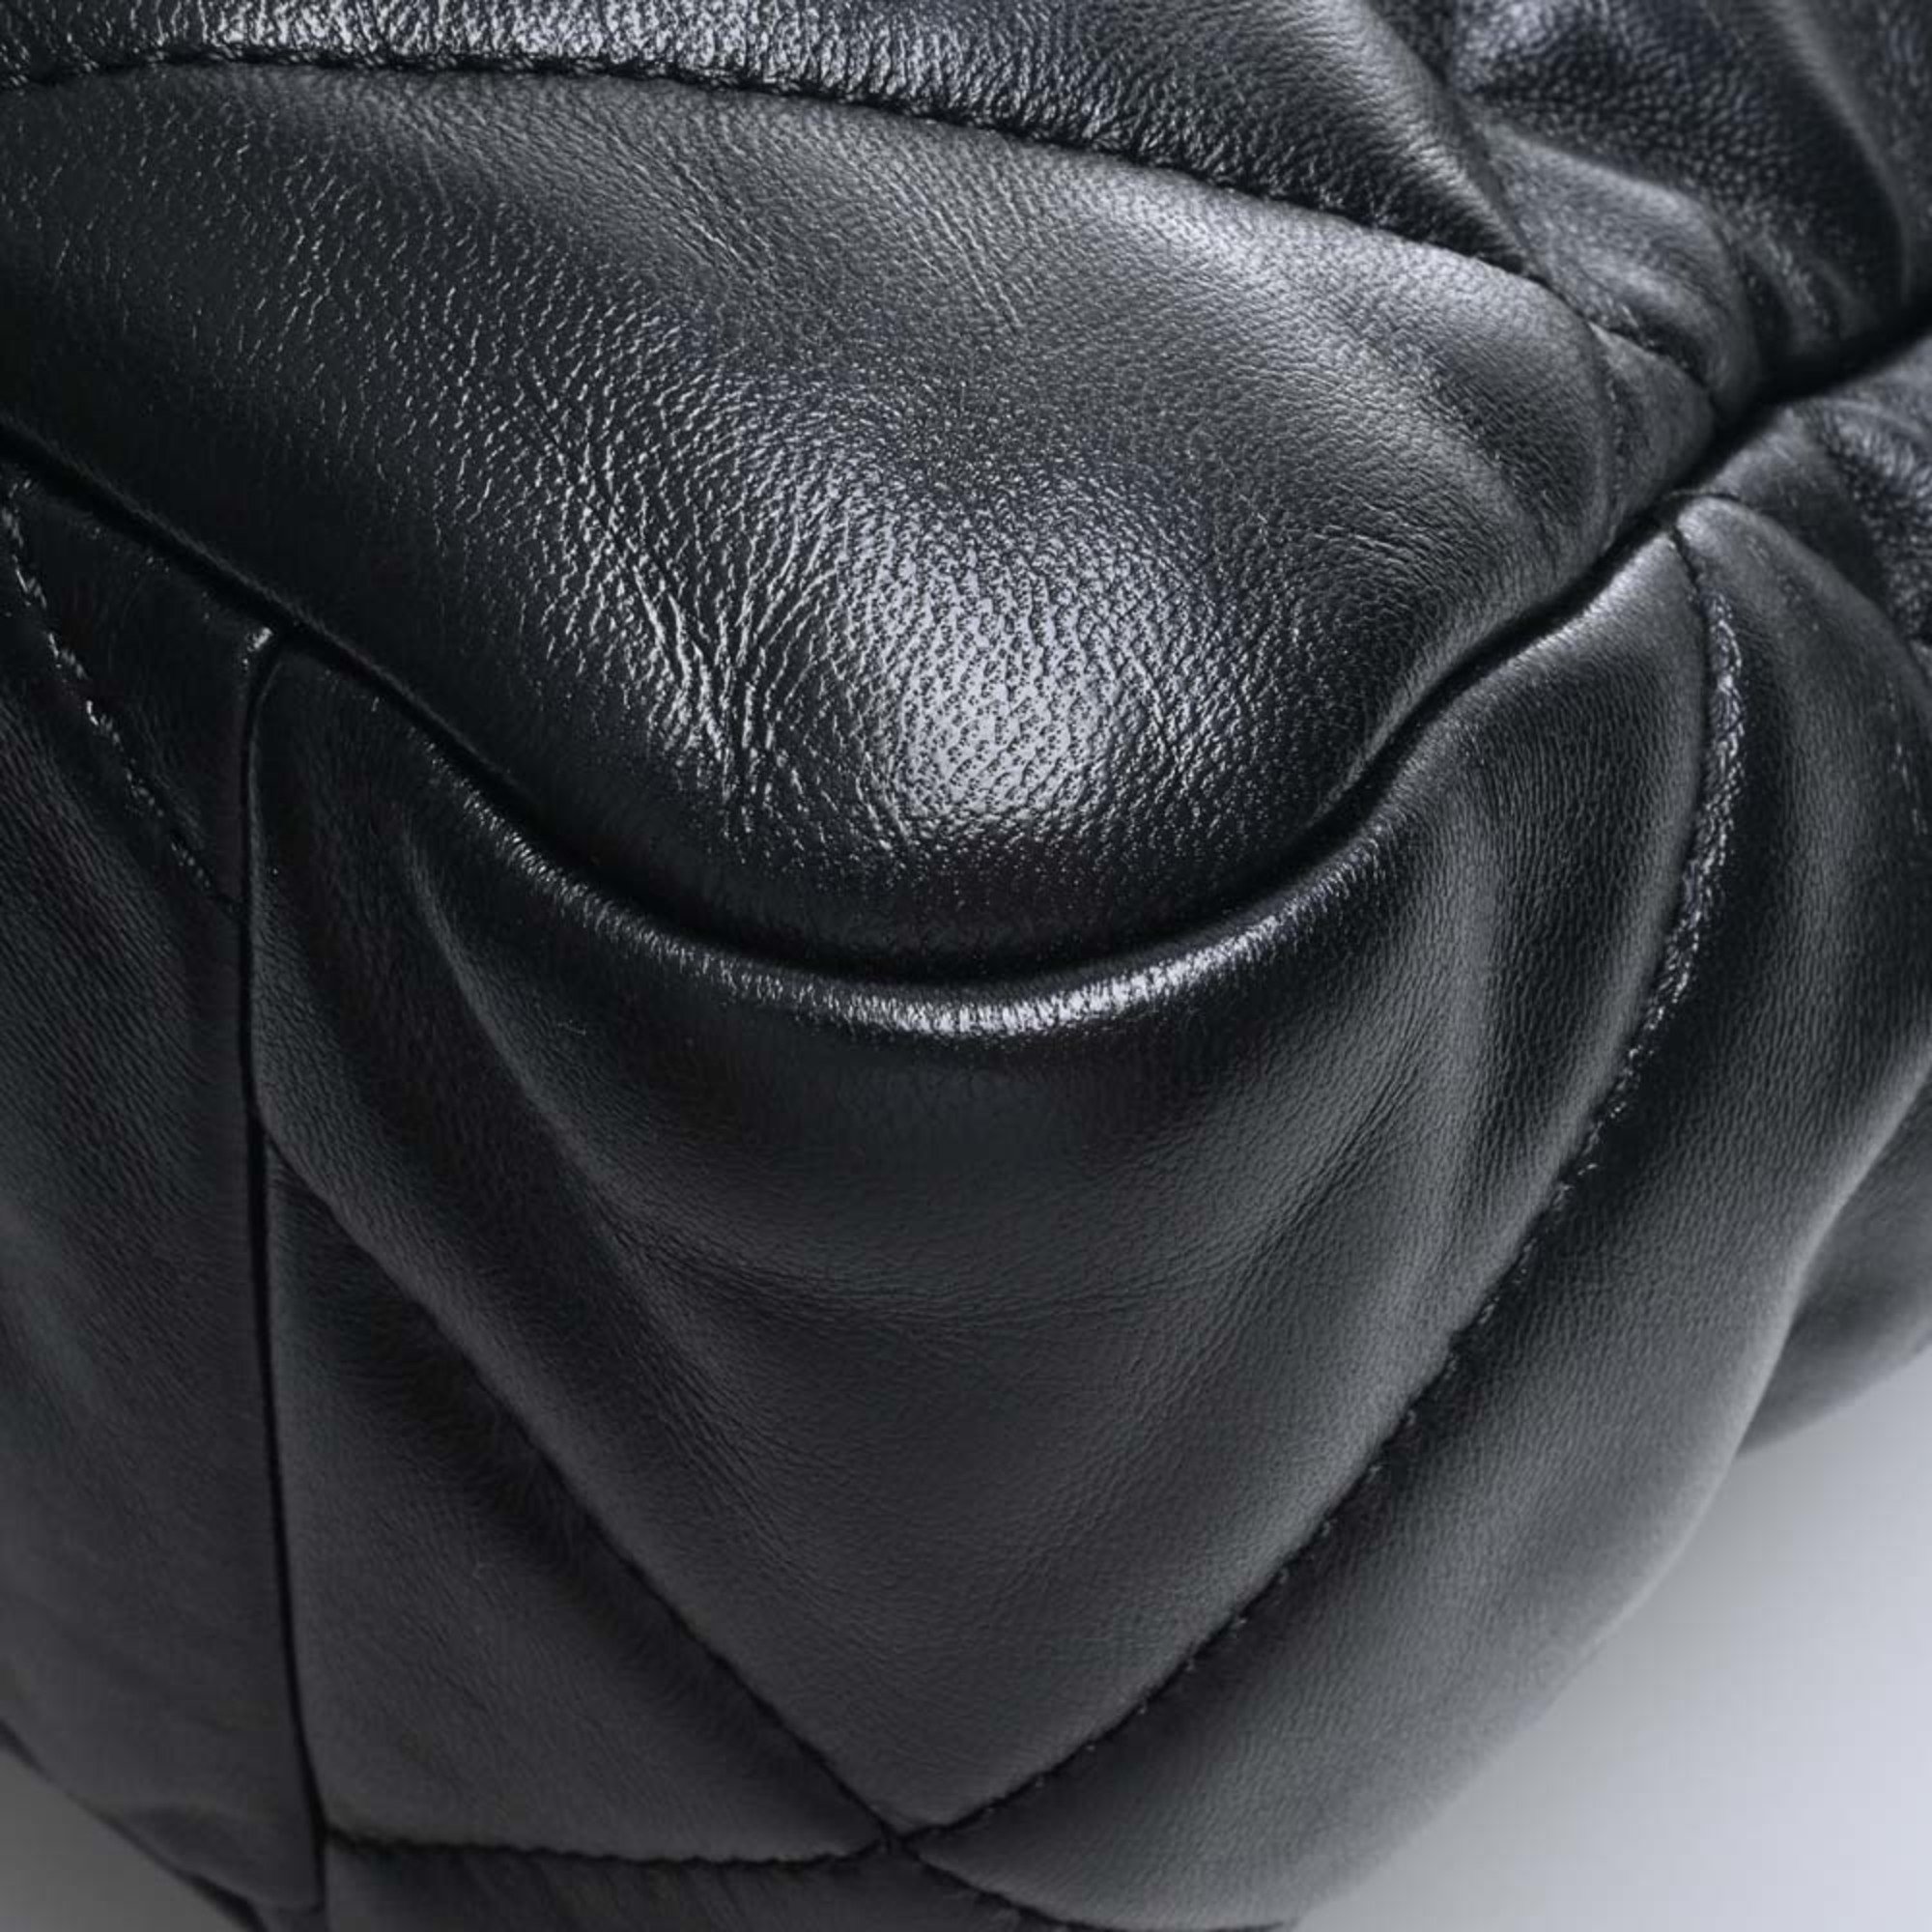 CHANEL Chanel lambskin 19 bag coco mark chain shoulder AS3660 black ladies